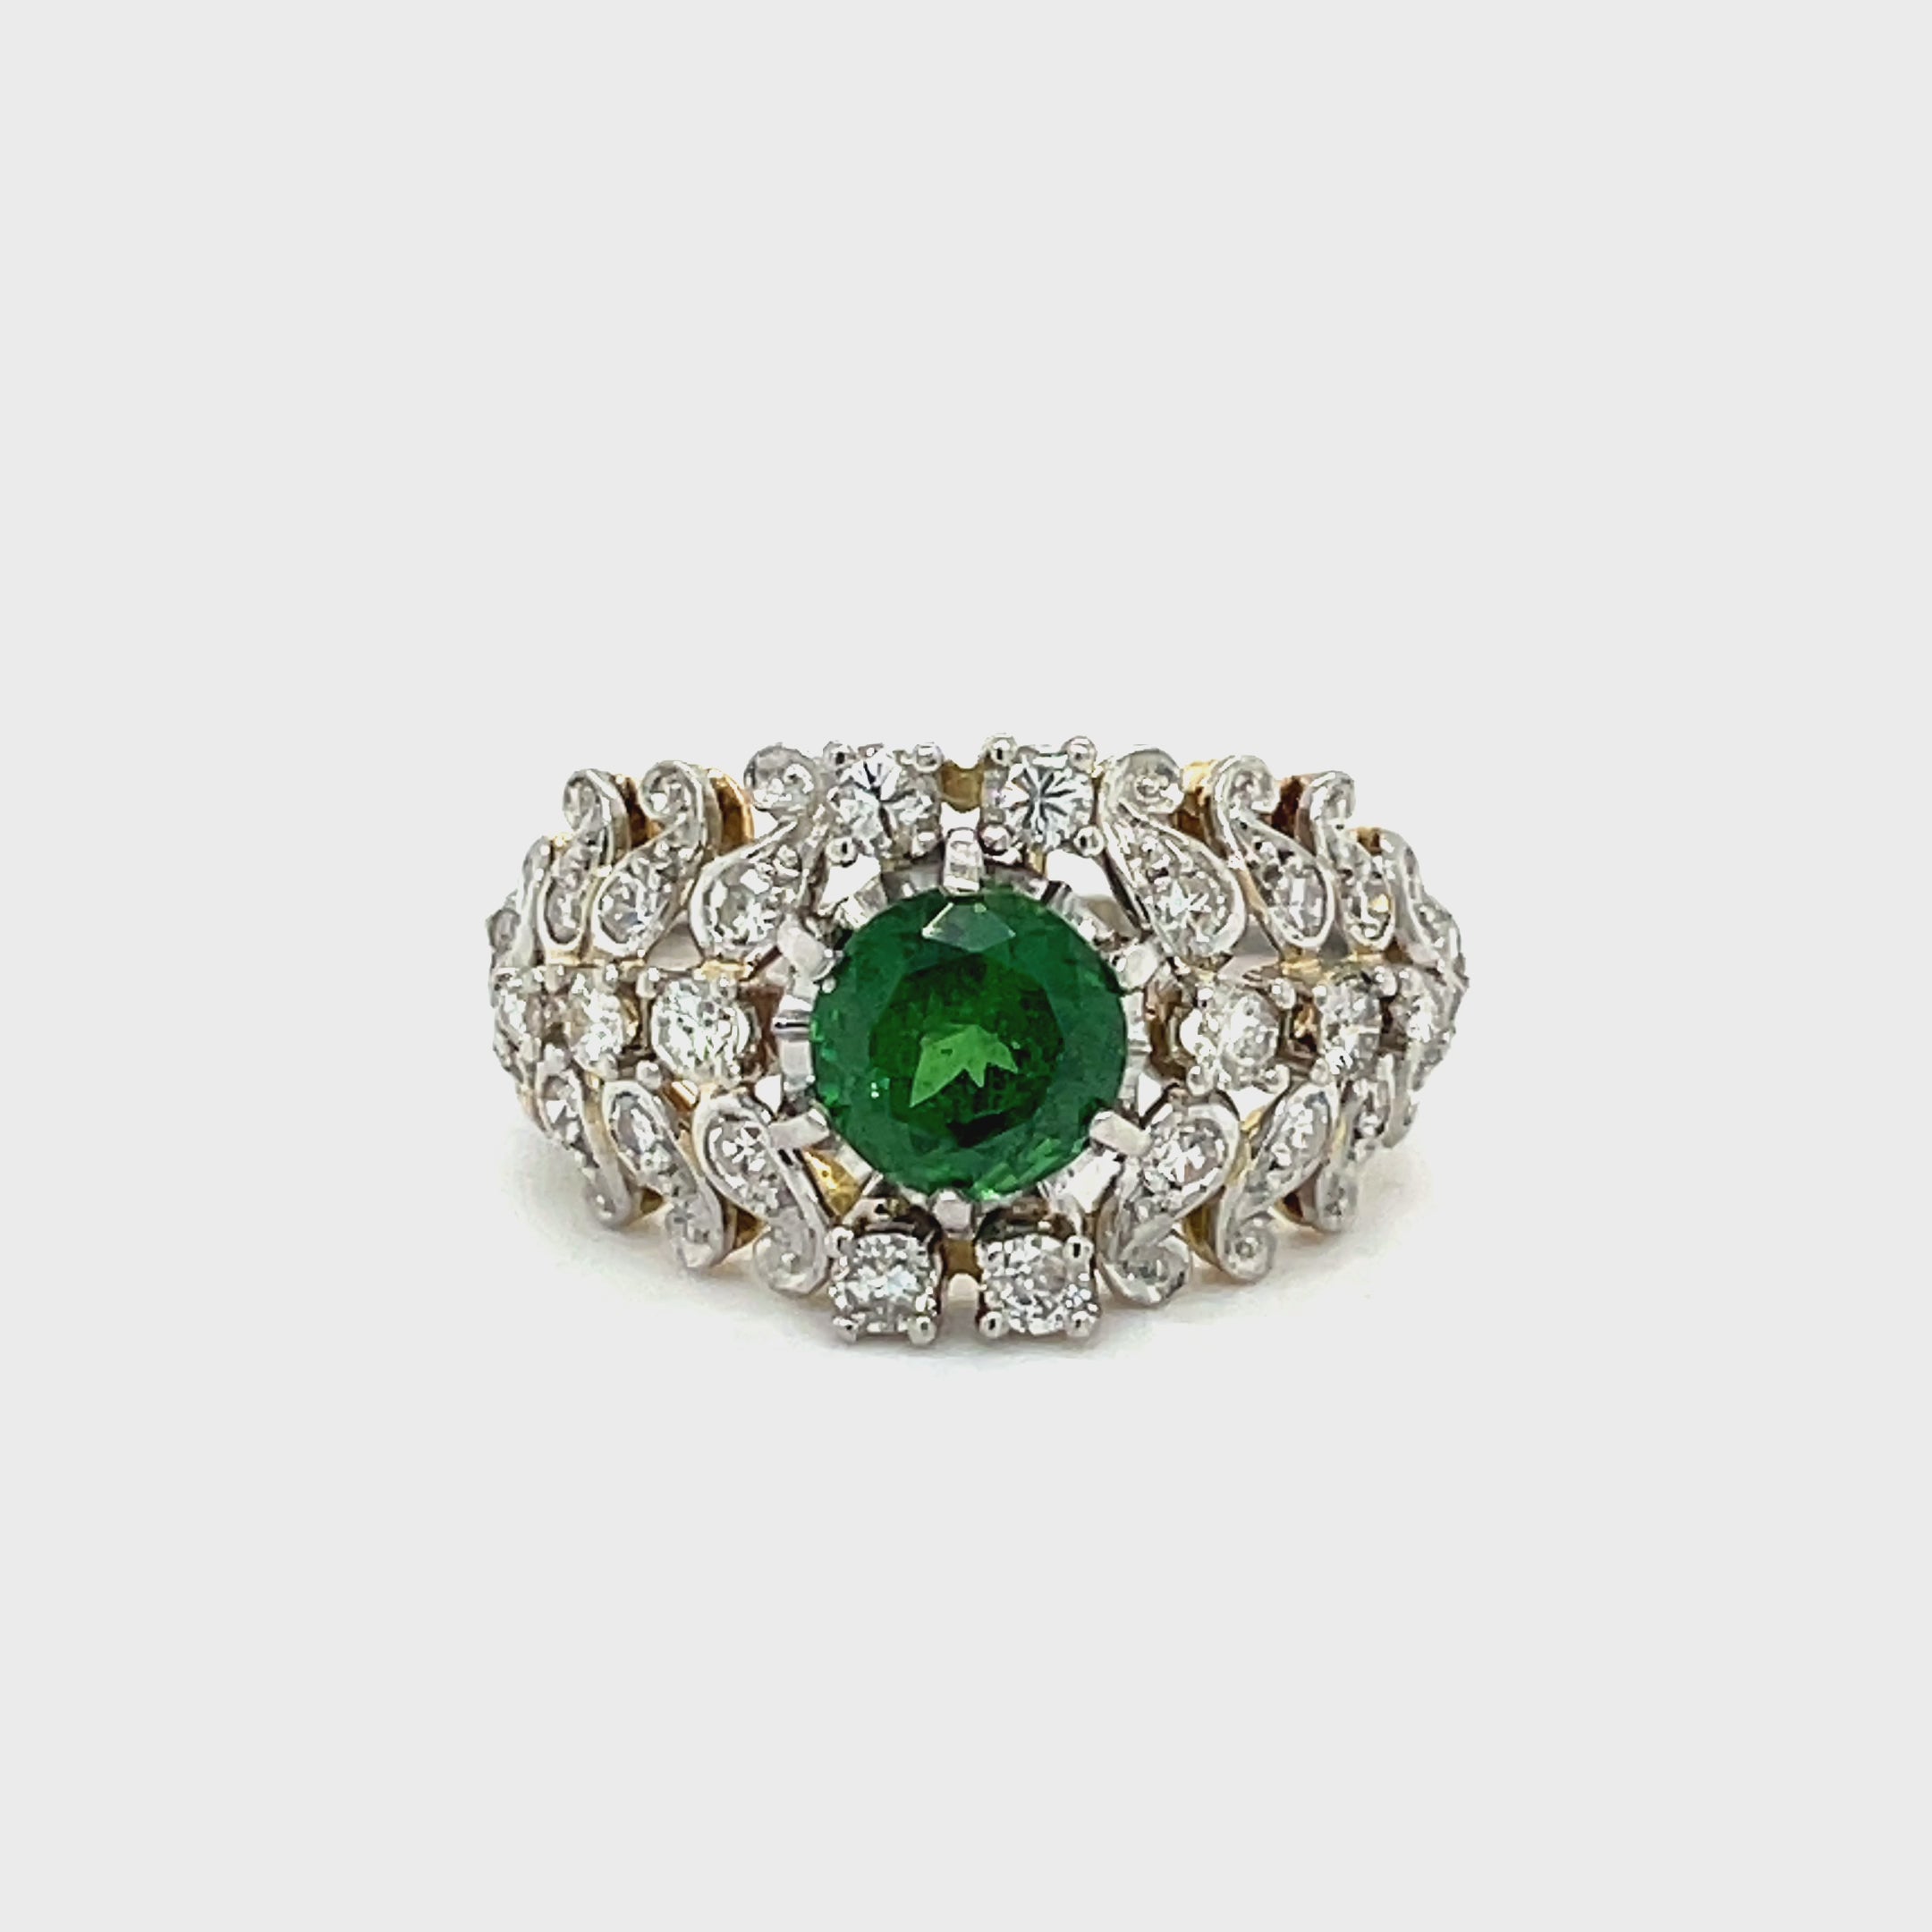 Edwardian Ring 1.64ct Tsavorite Garnet .80ct Diamonds Platinum over 18KY Antique (Circa 1900s) at Regard Jewelry in Austin, Texas